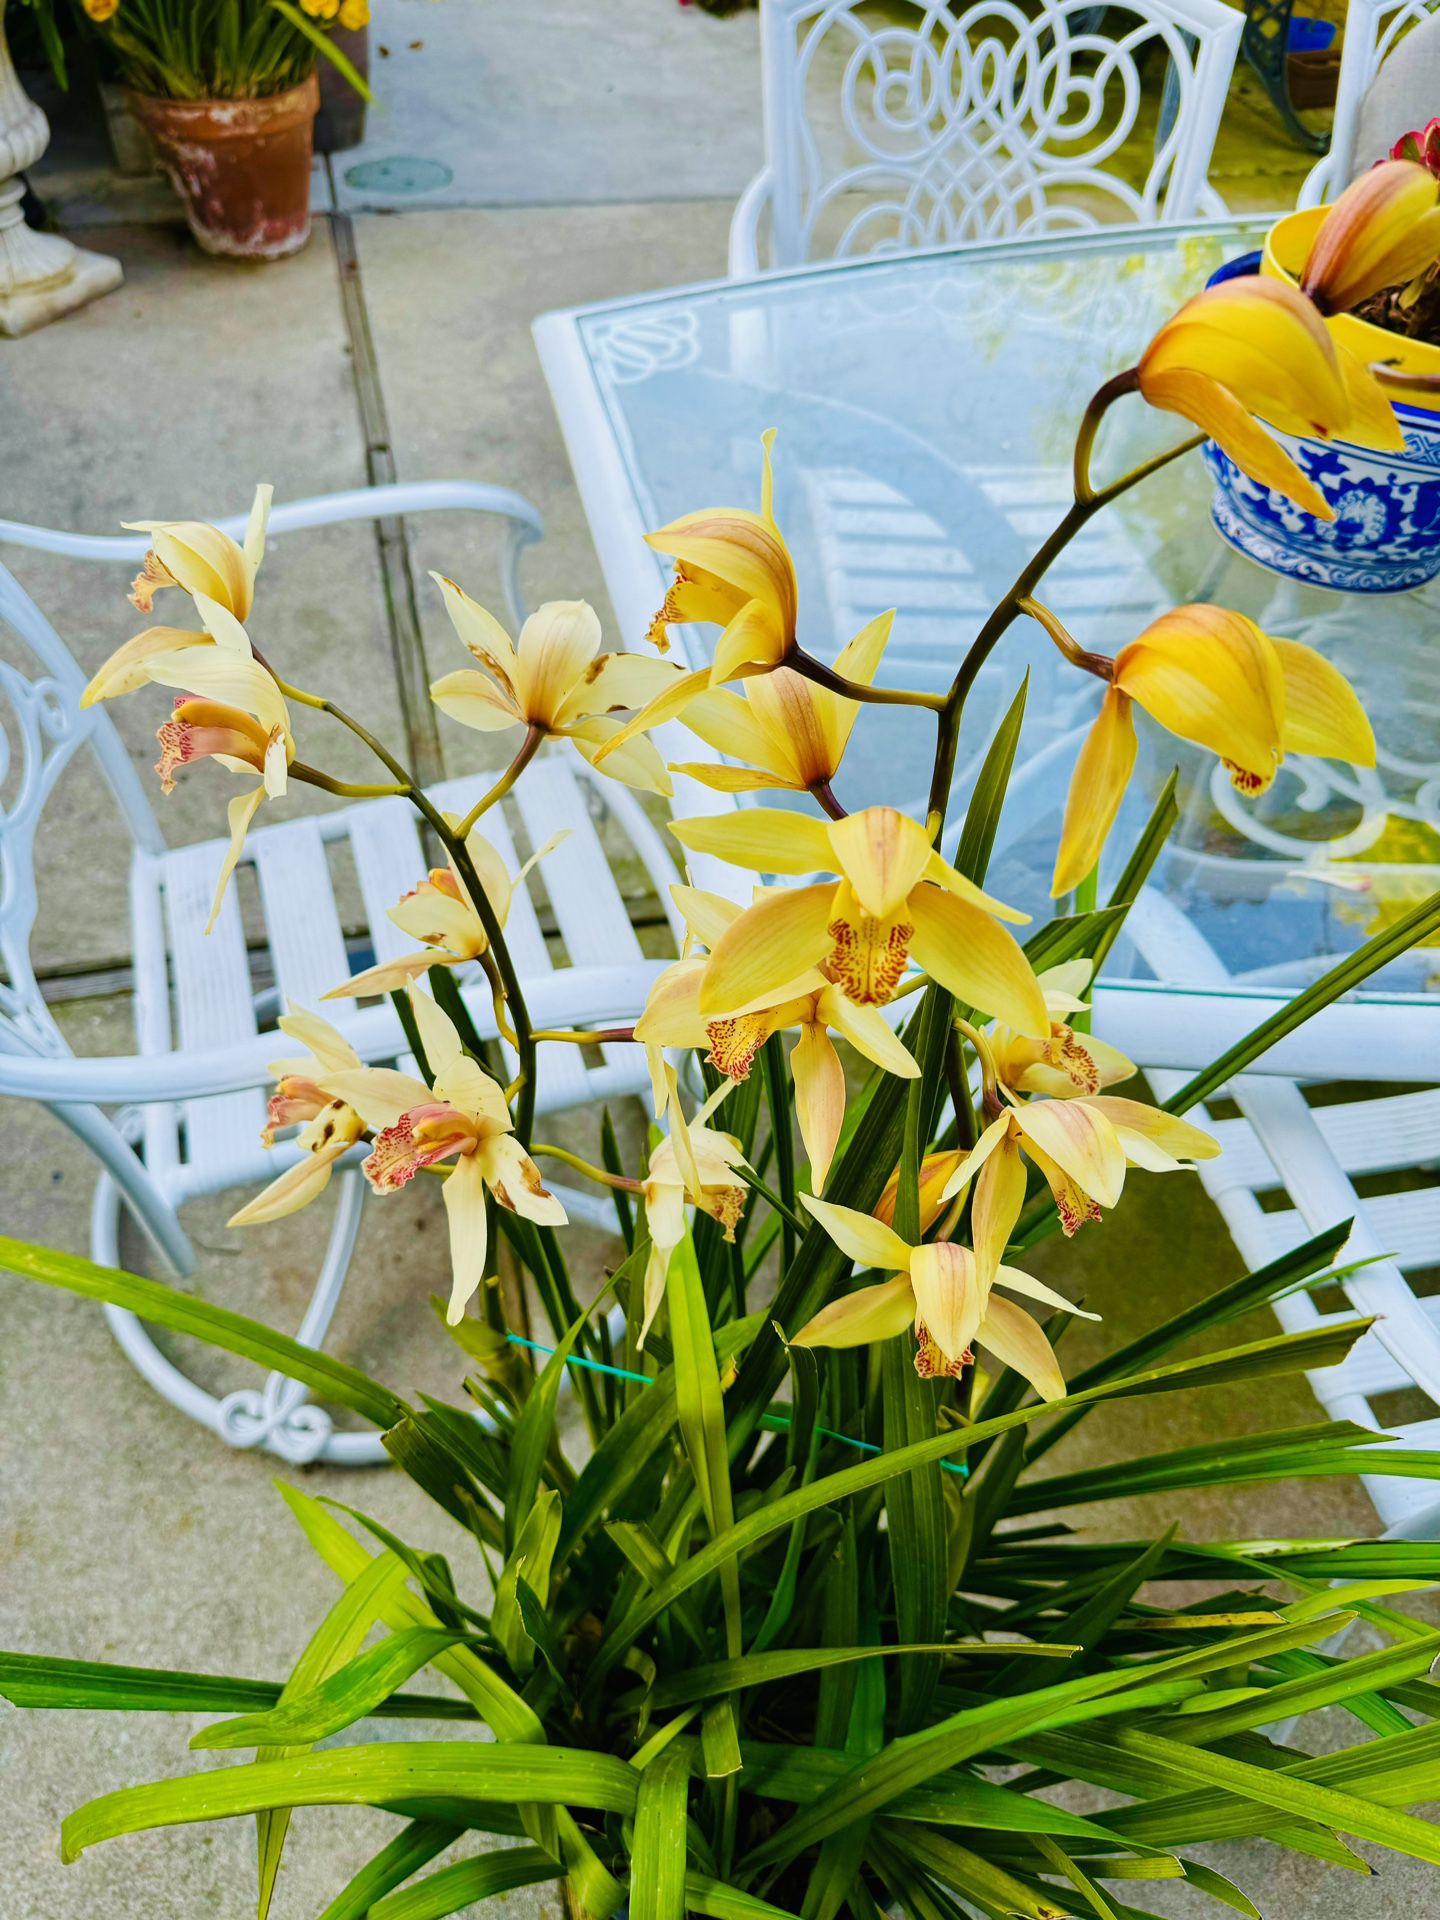 Cymbidium Yellow Orchids Plants- In Full 5 Gallon Pot …easily makes 3-4 Pots When Repot